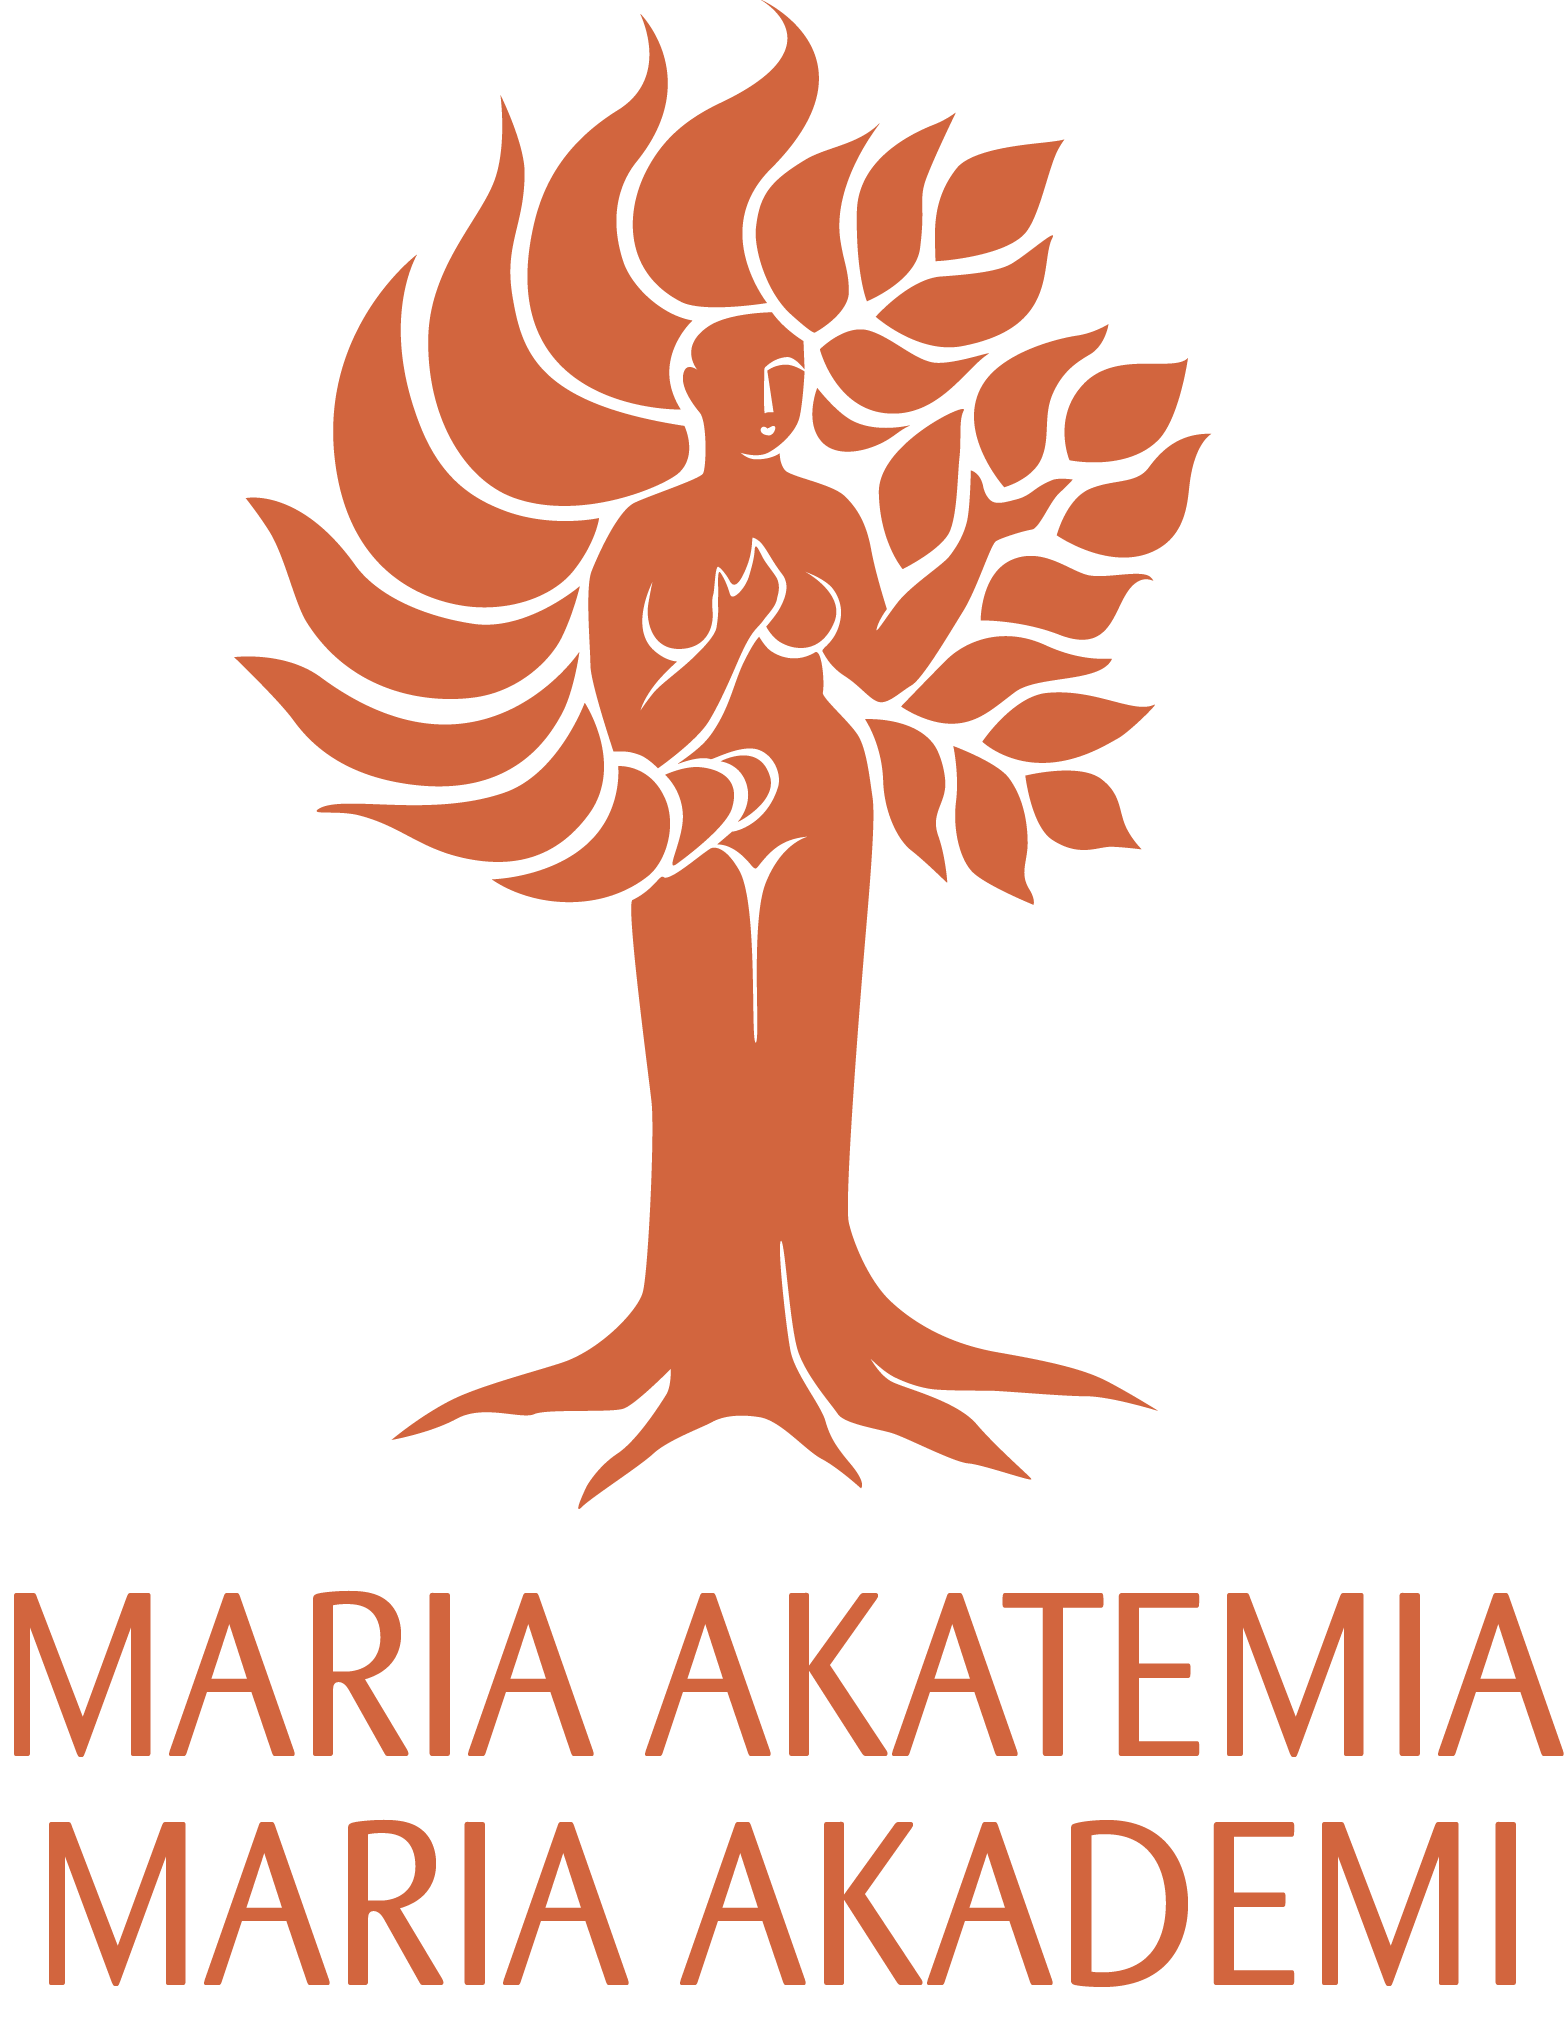 Maria Akatemian logo.